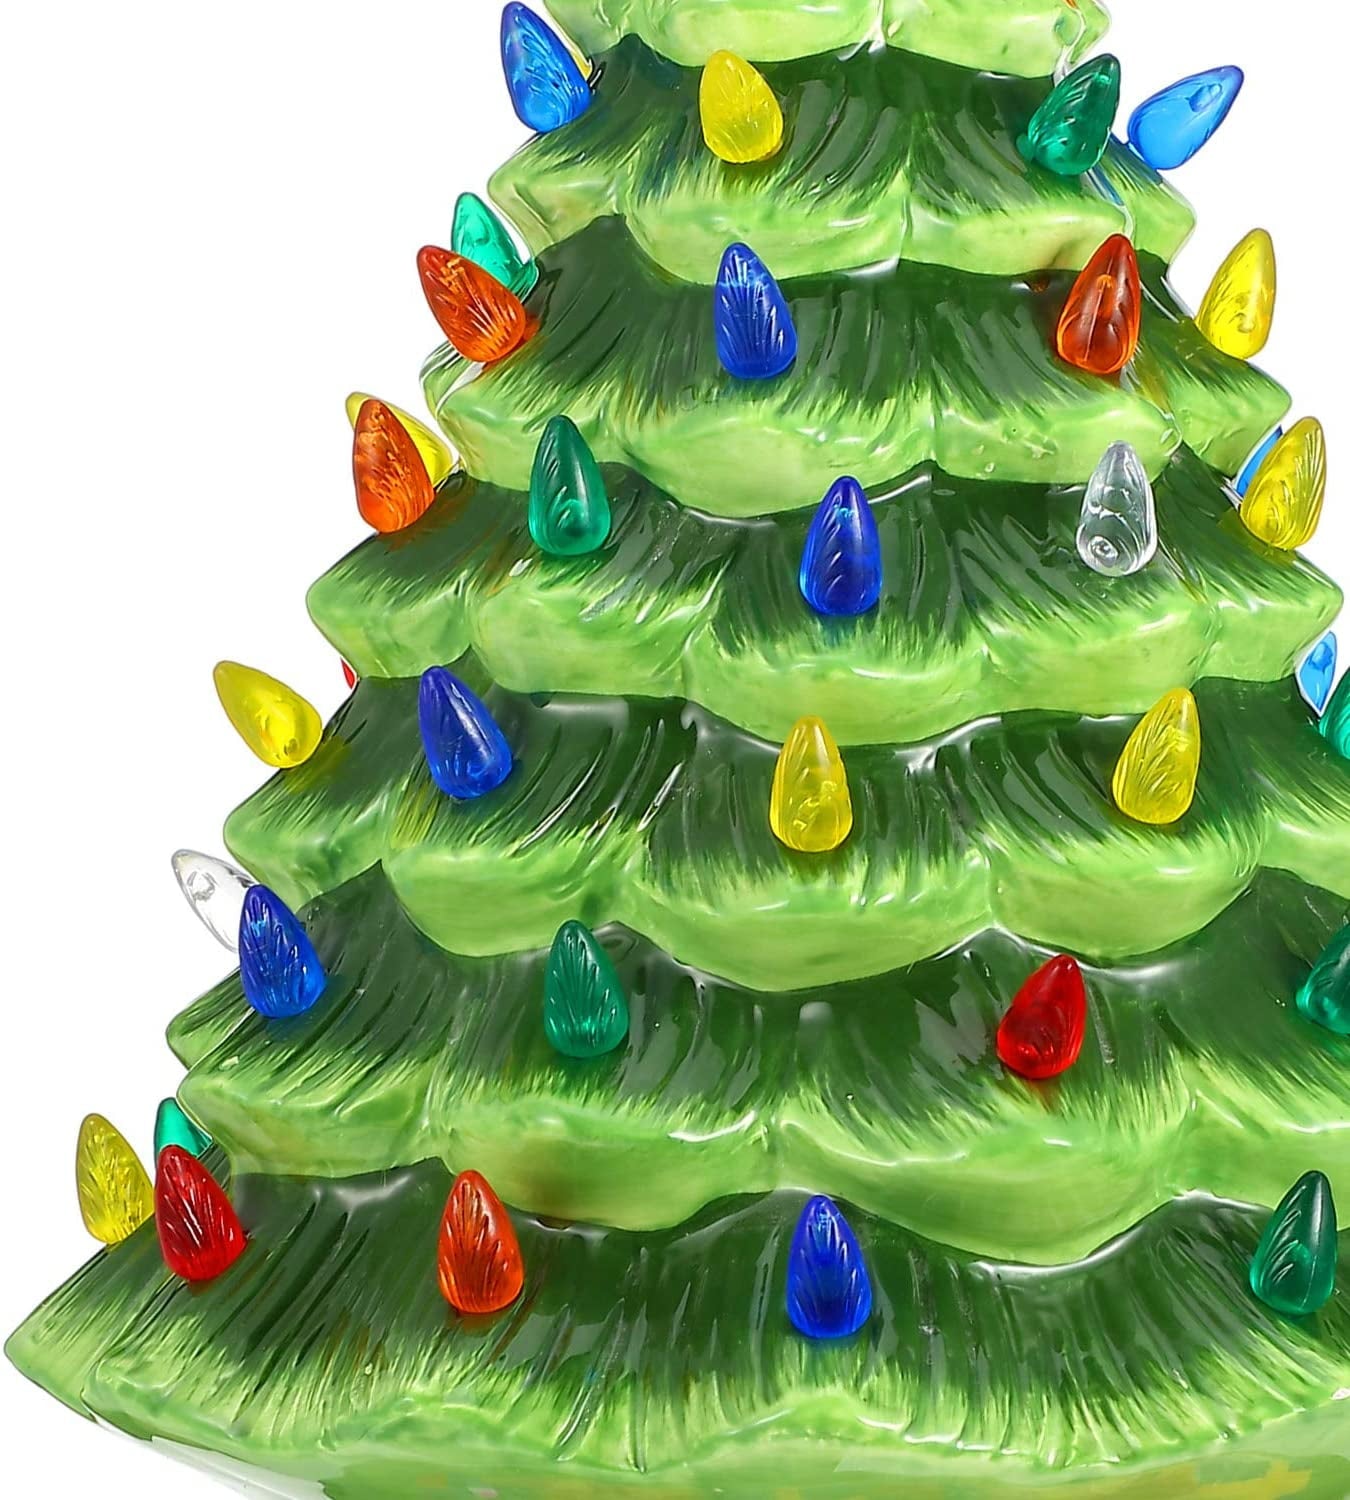 QUMENEY 151 Pcs Ceramic Christmas Tree Replacement Lights, Multi Color Medium Plastic Light Up Twist/Bulbs and 1 Piece Ceramic Tree Star Orn